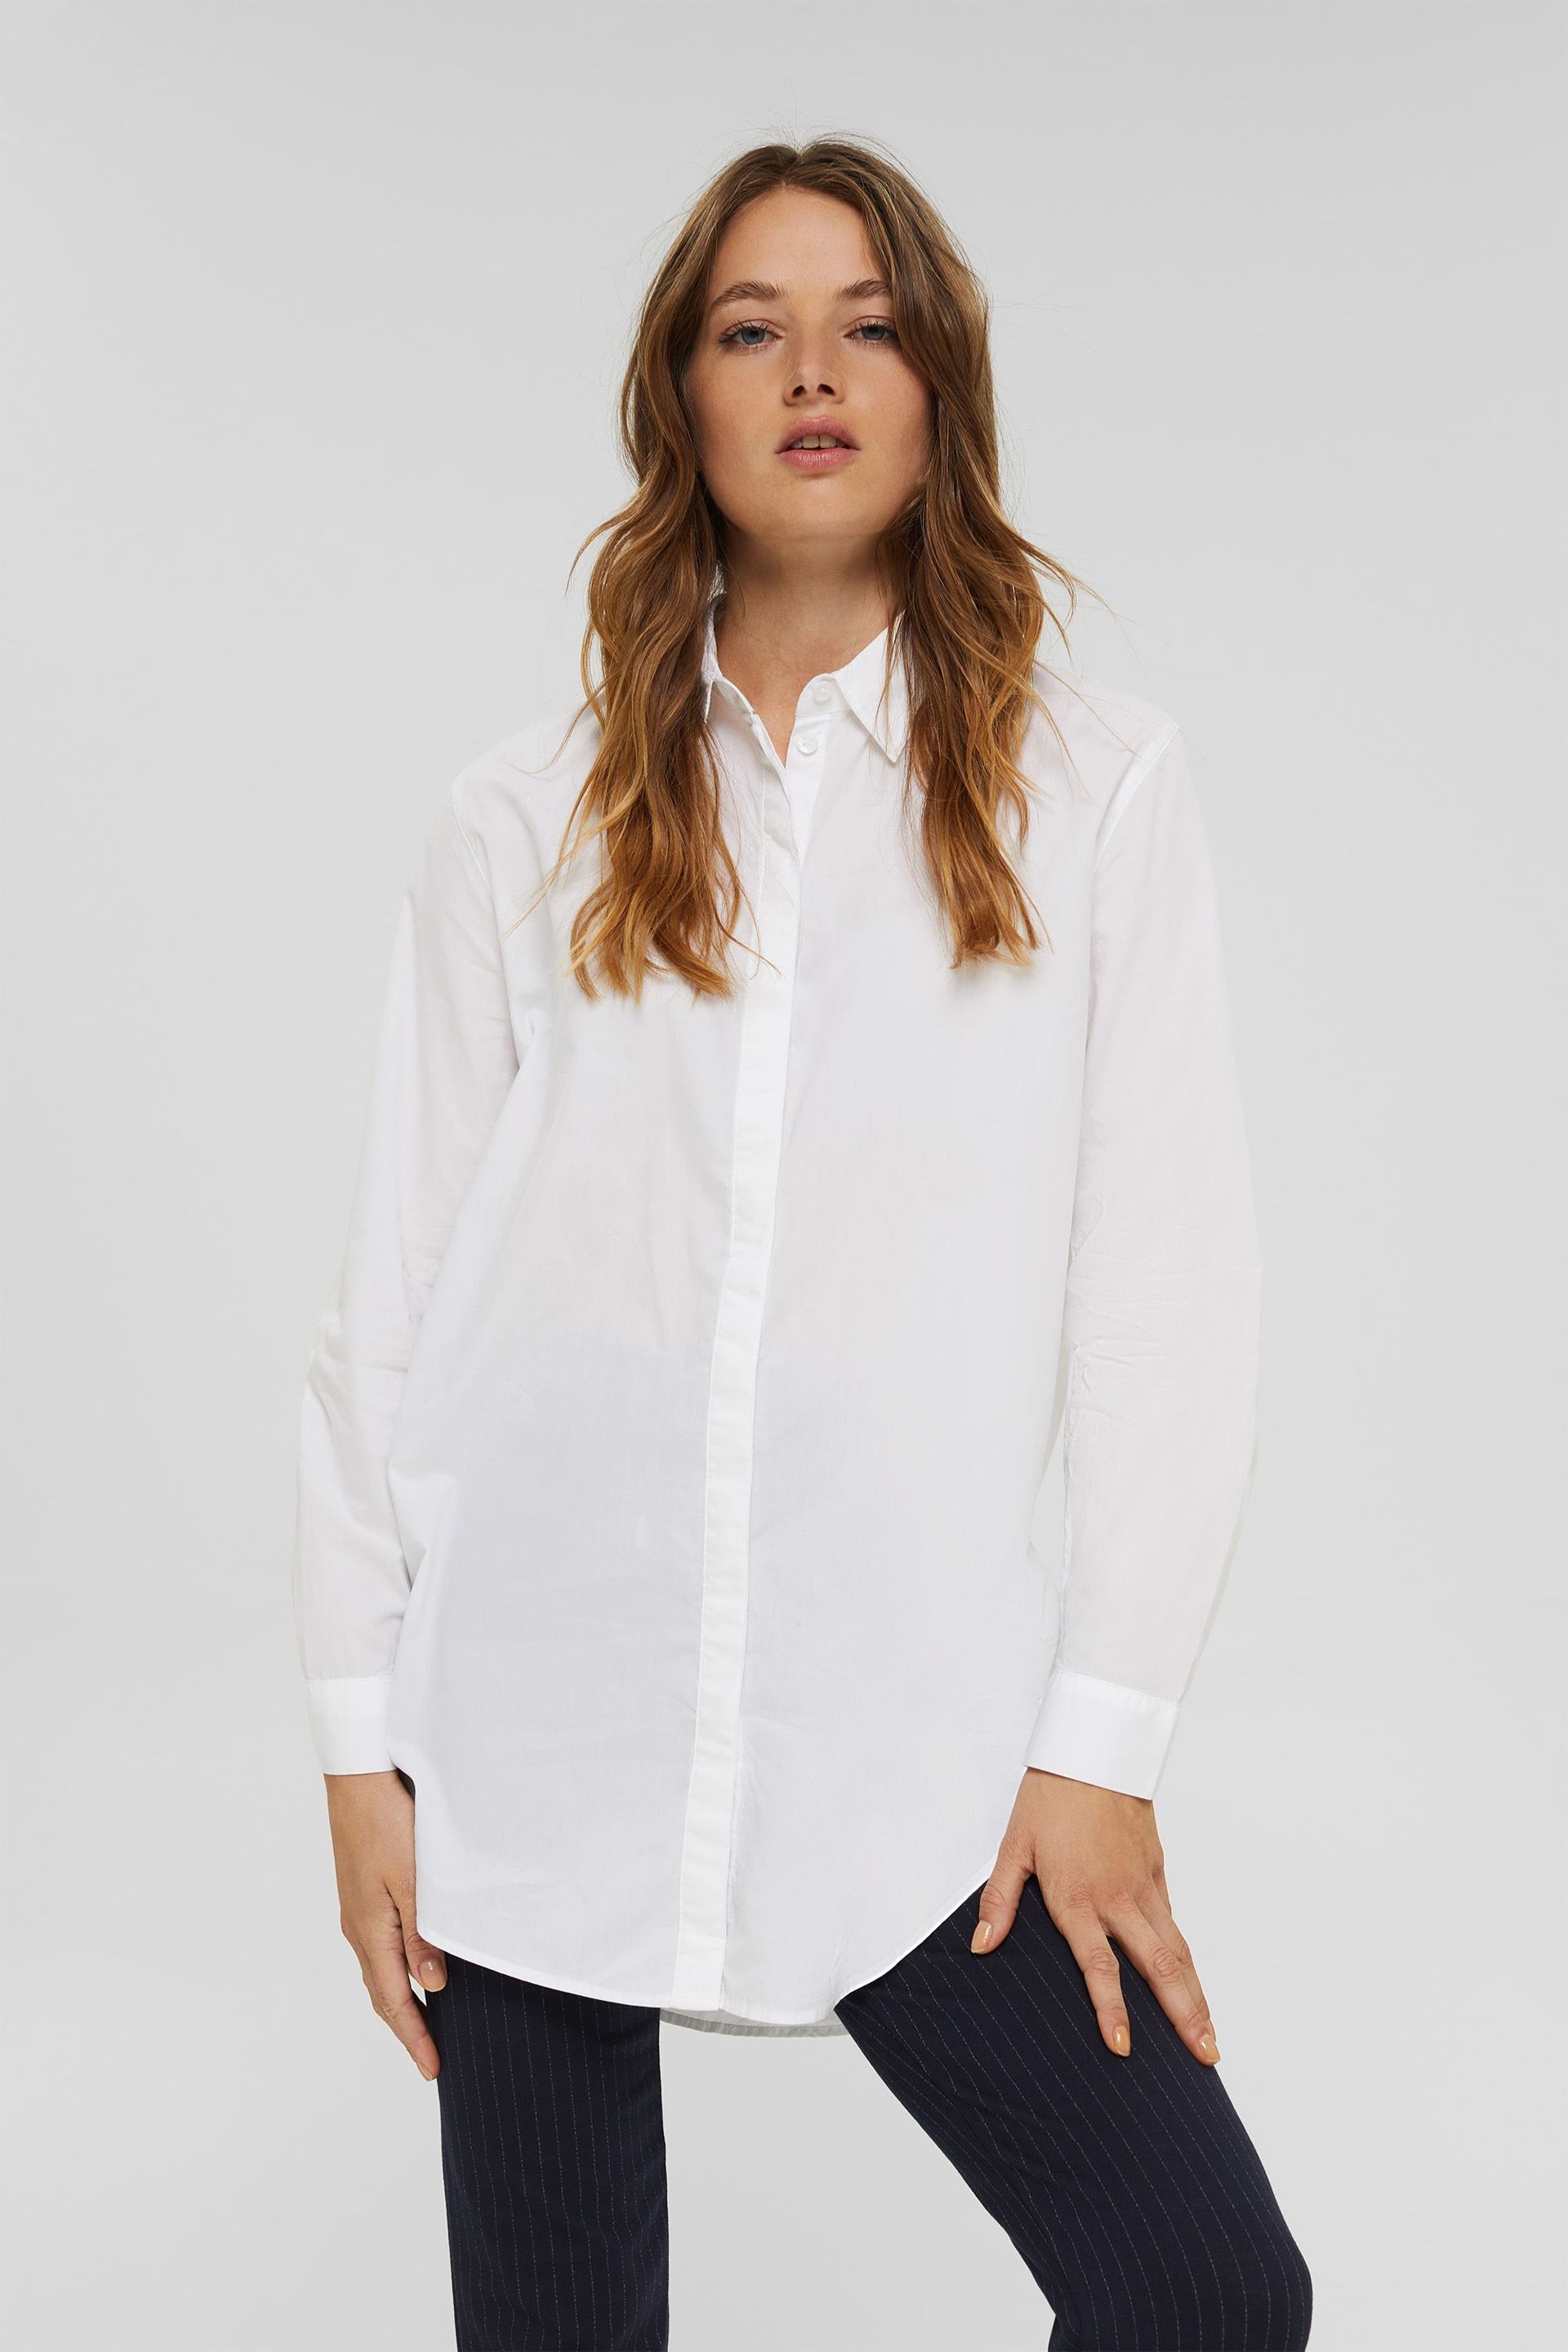 salaris Geslaagd halfgeleider Esprit lange witte blouse 991EE1F331 100